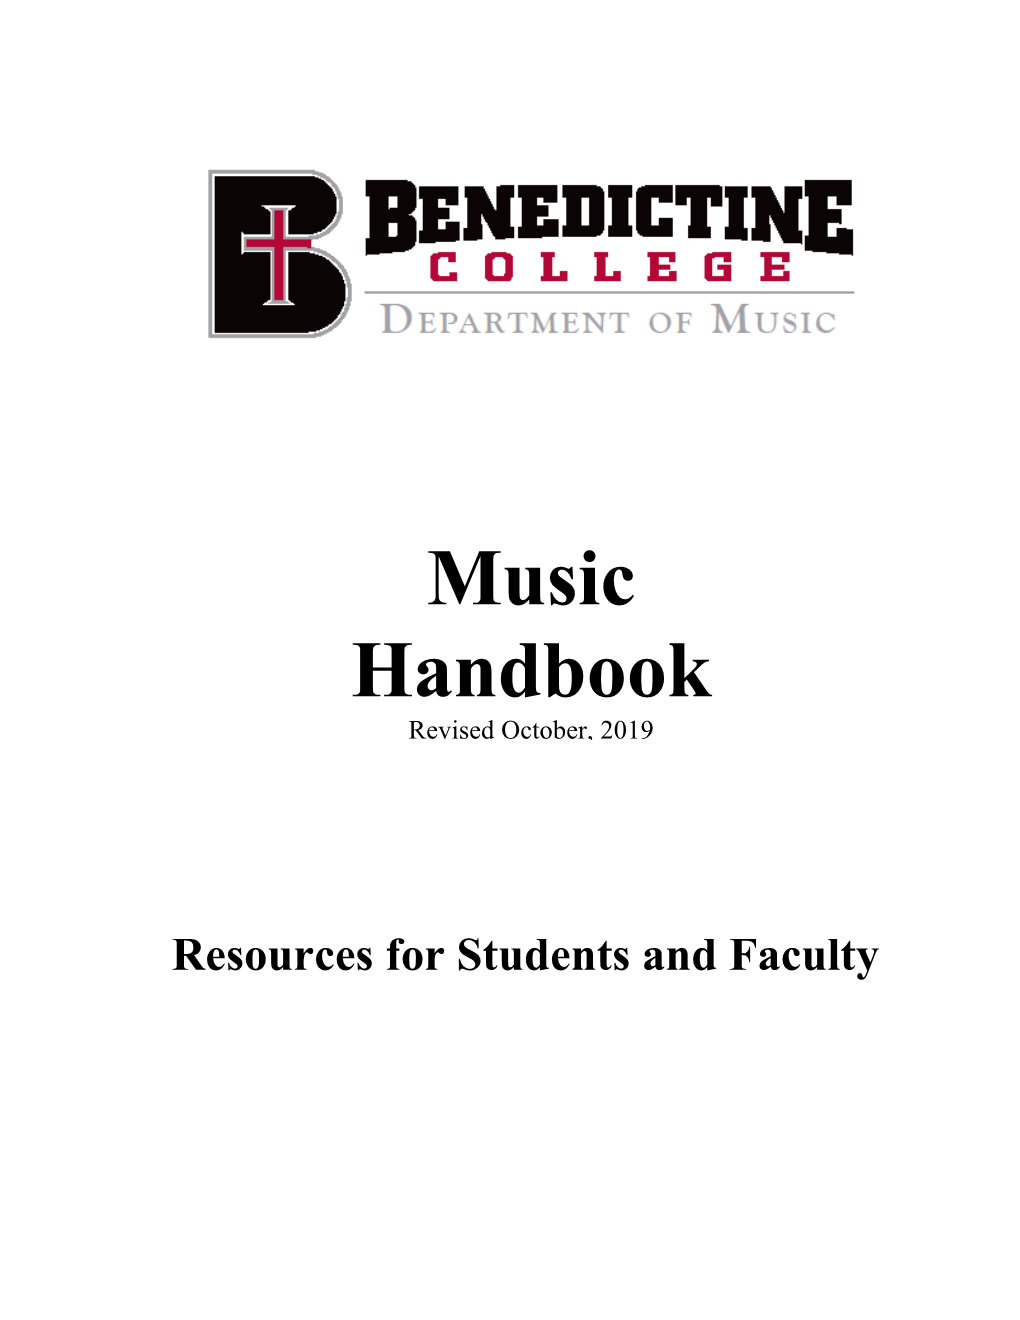 Benedictine College Music Handbook